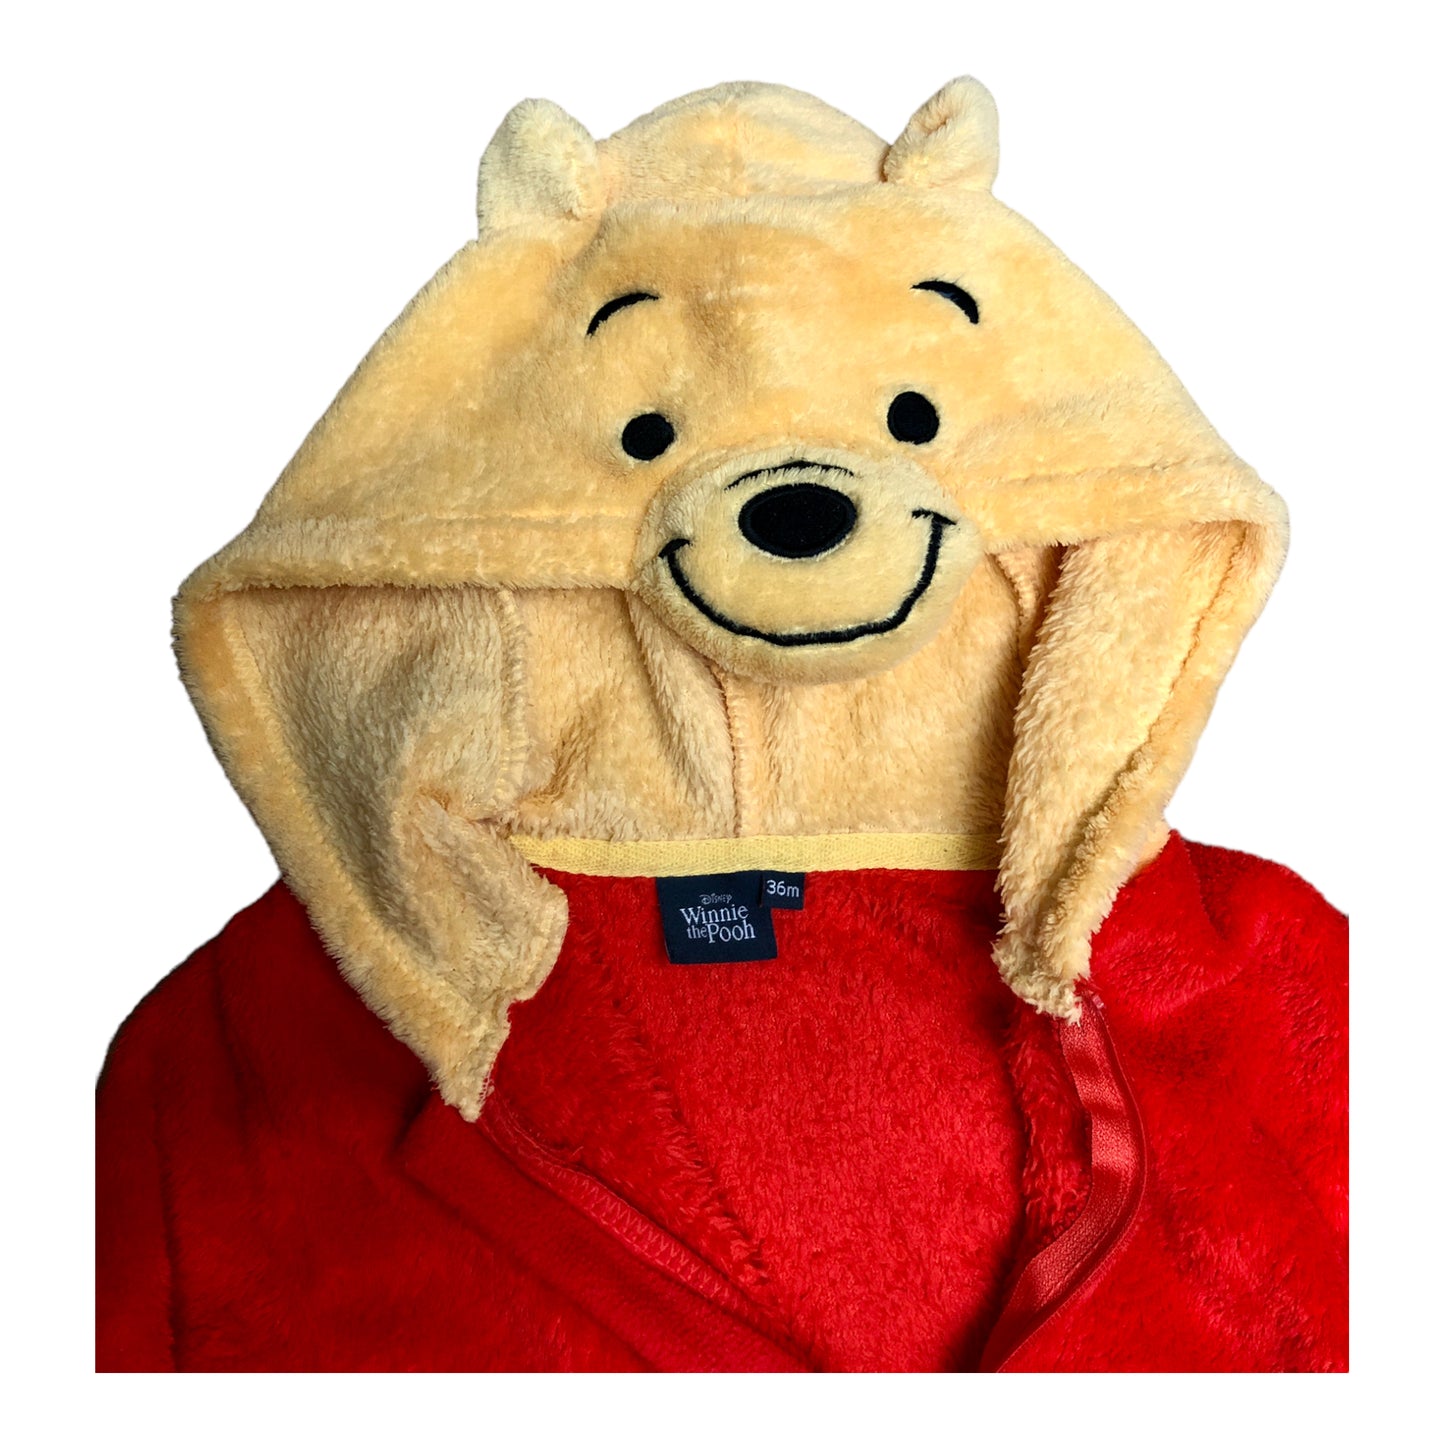 Disney ® Winnie the Pooh Costume - 36 months